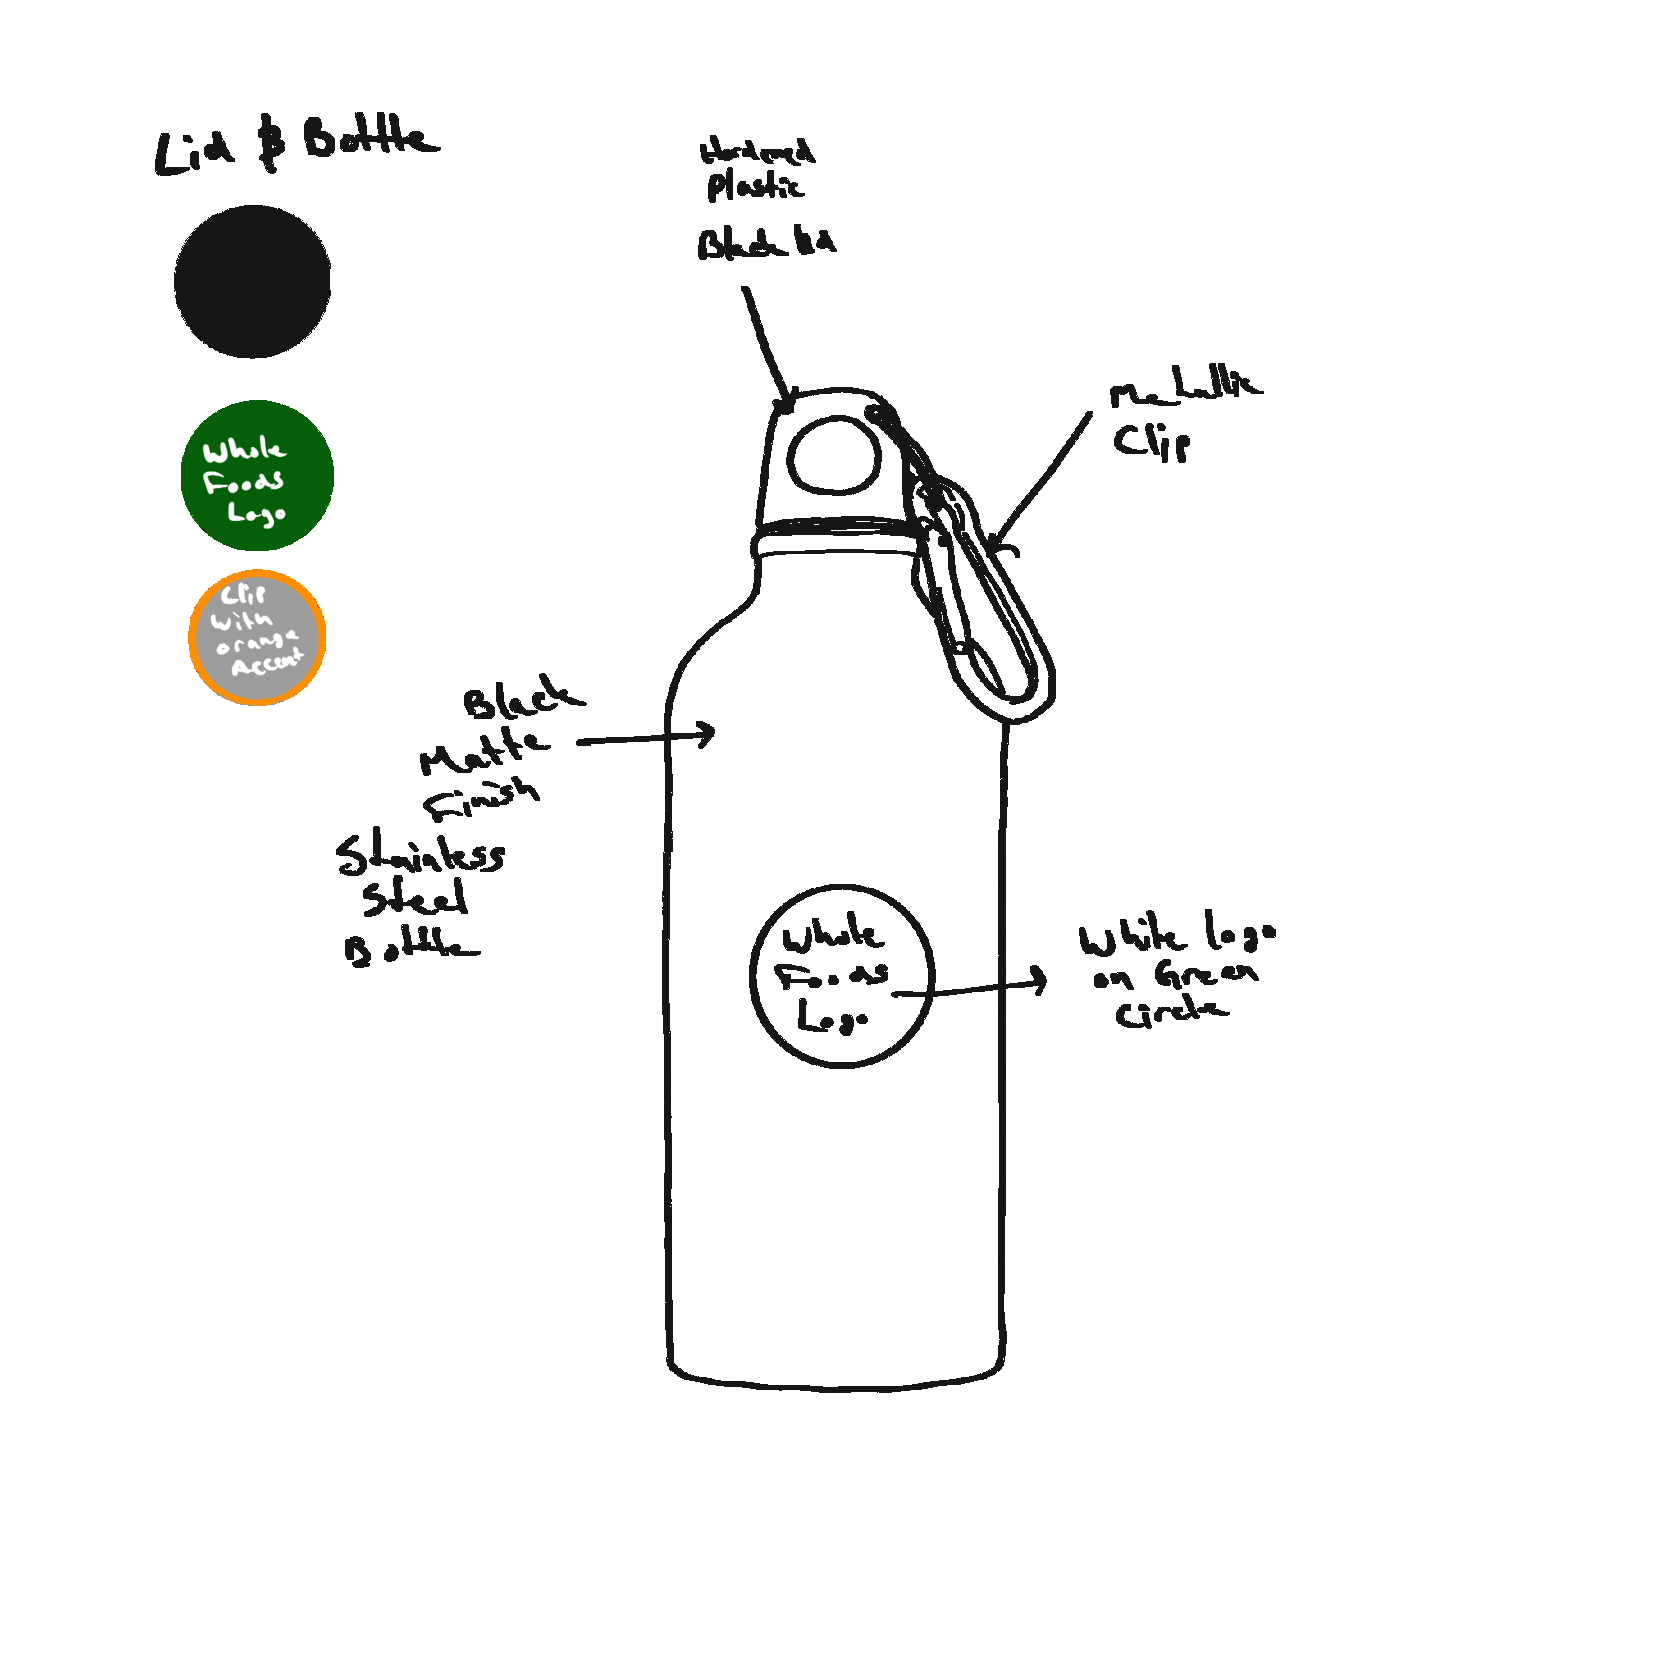 Whole Foods Sketch bottle